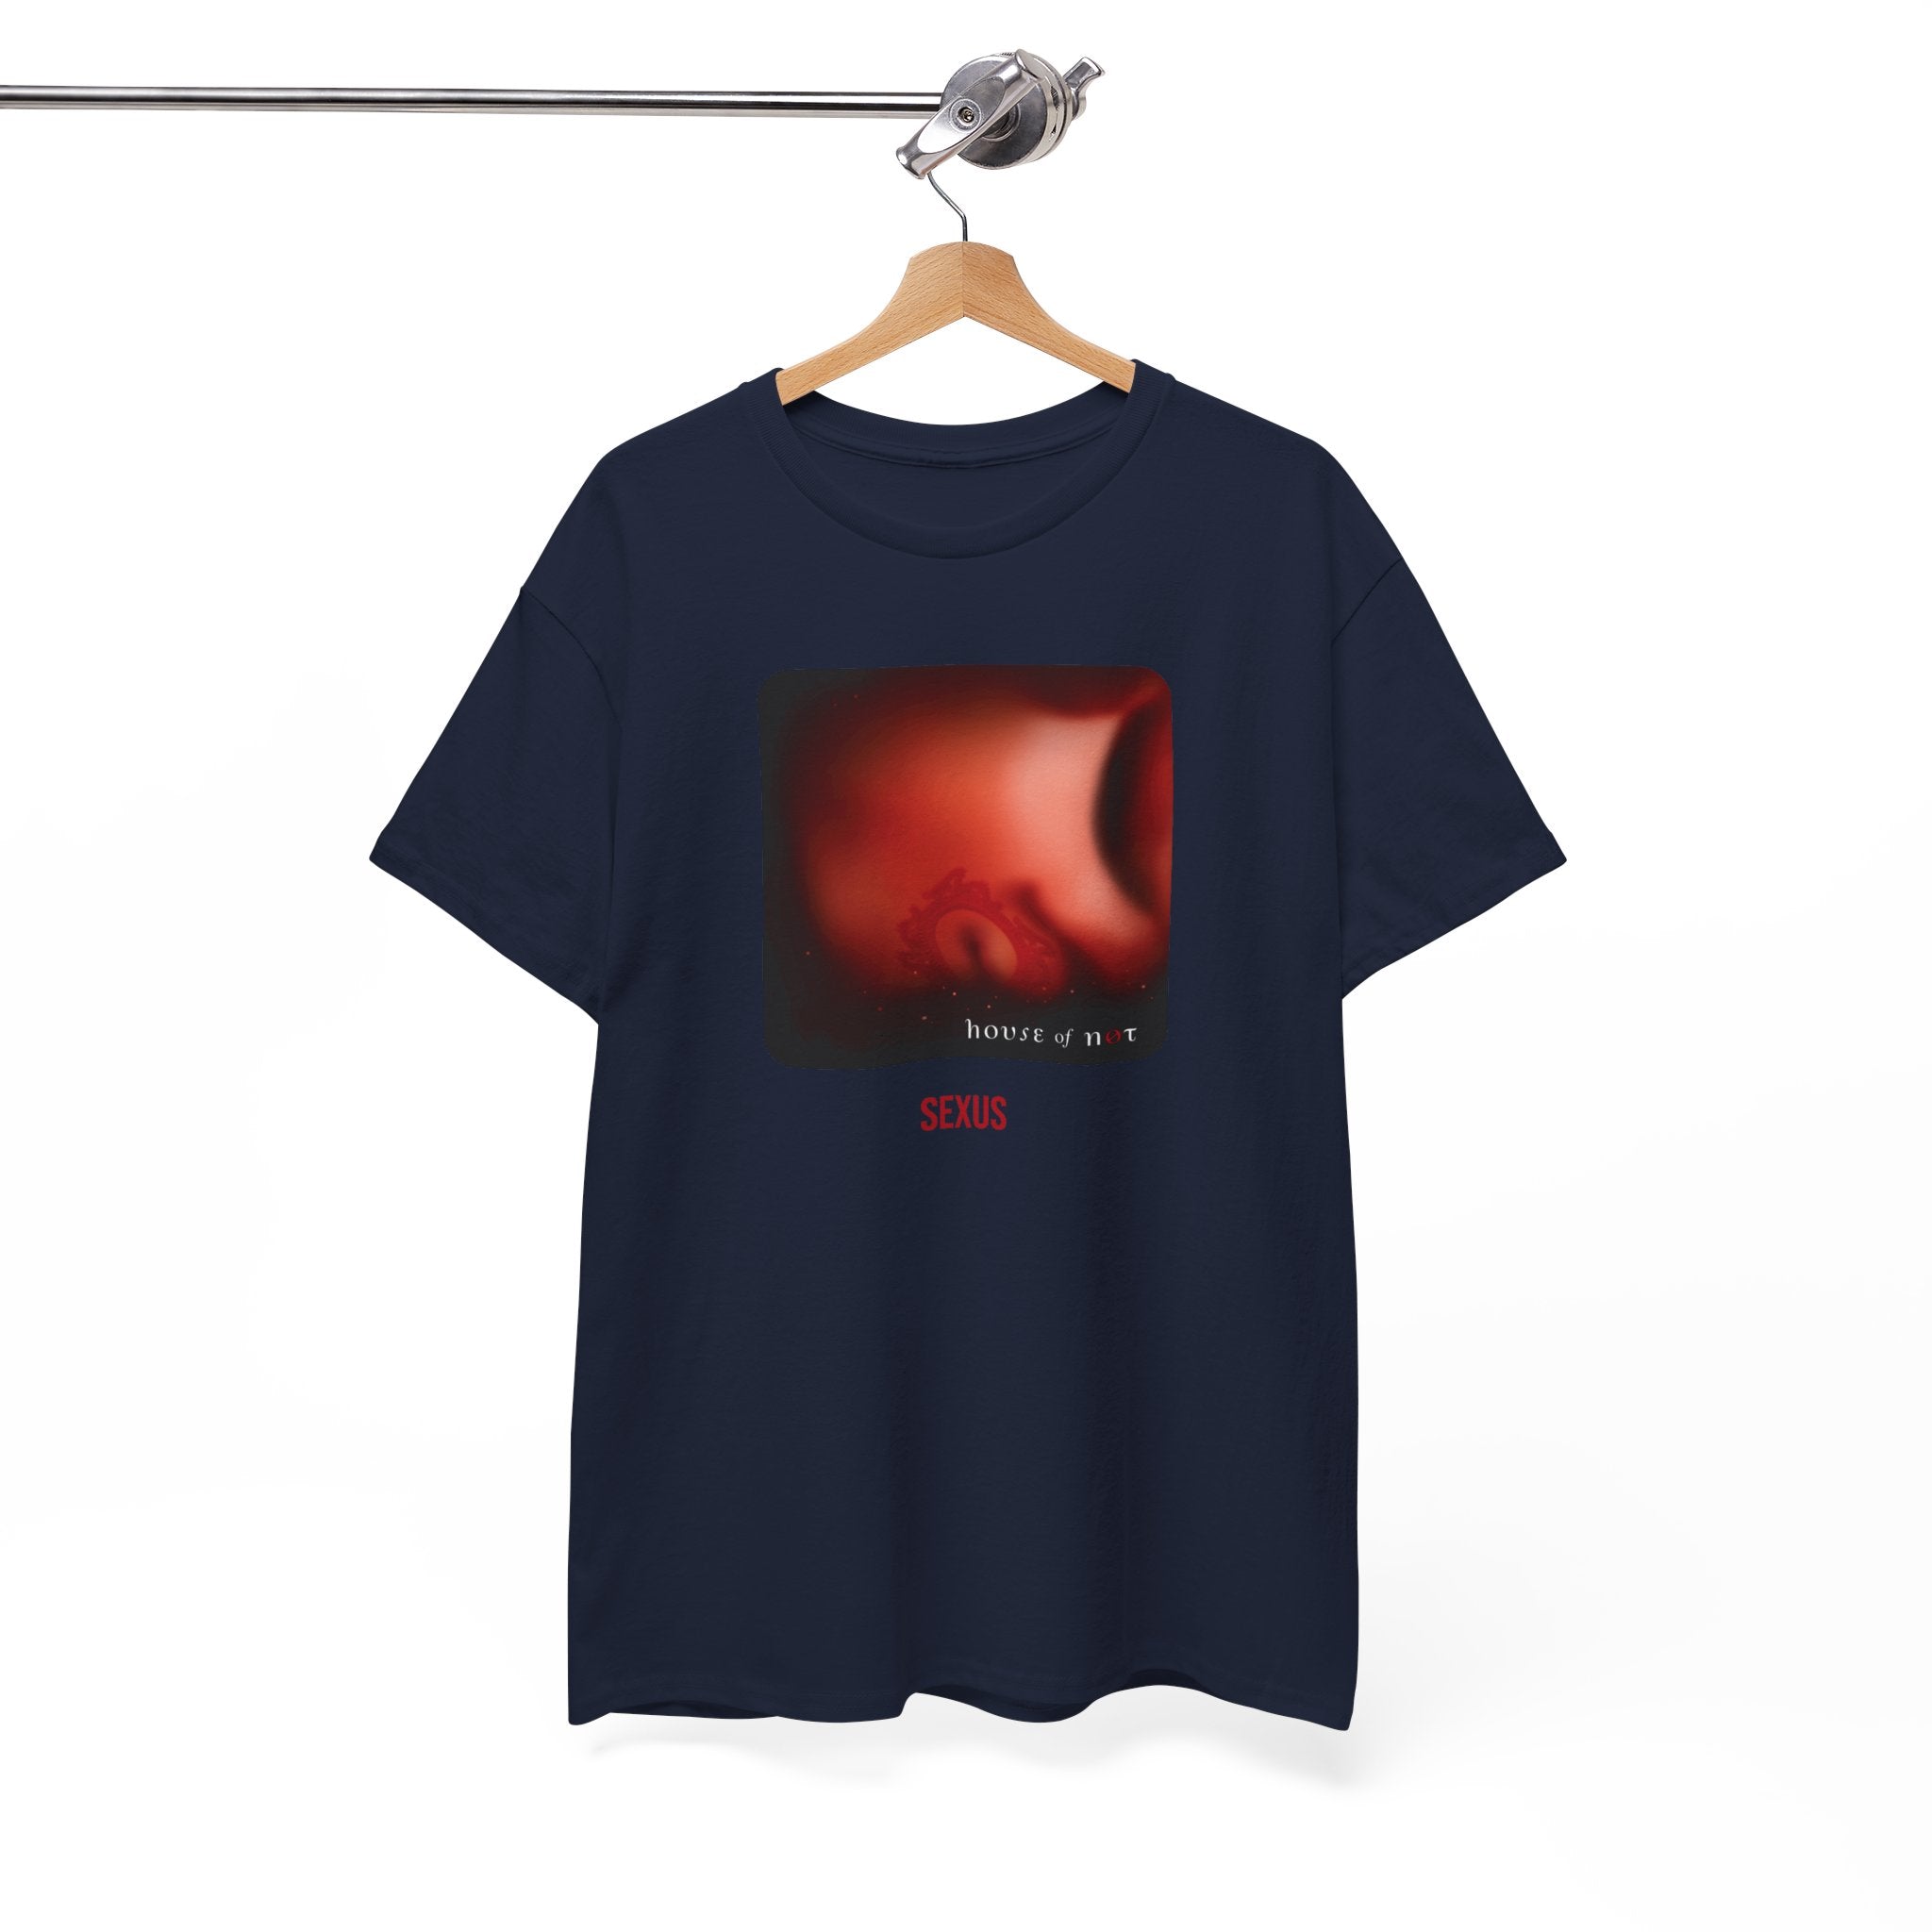 Sexus Album with Title T-Shirt